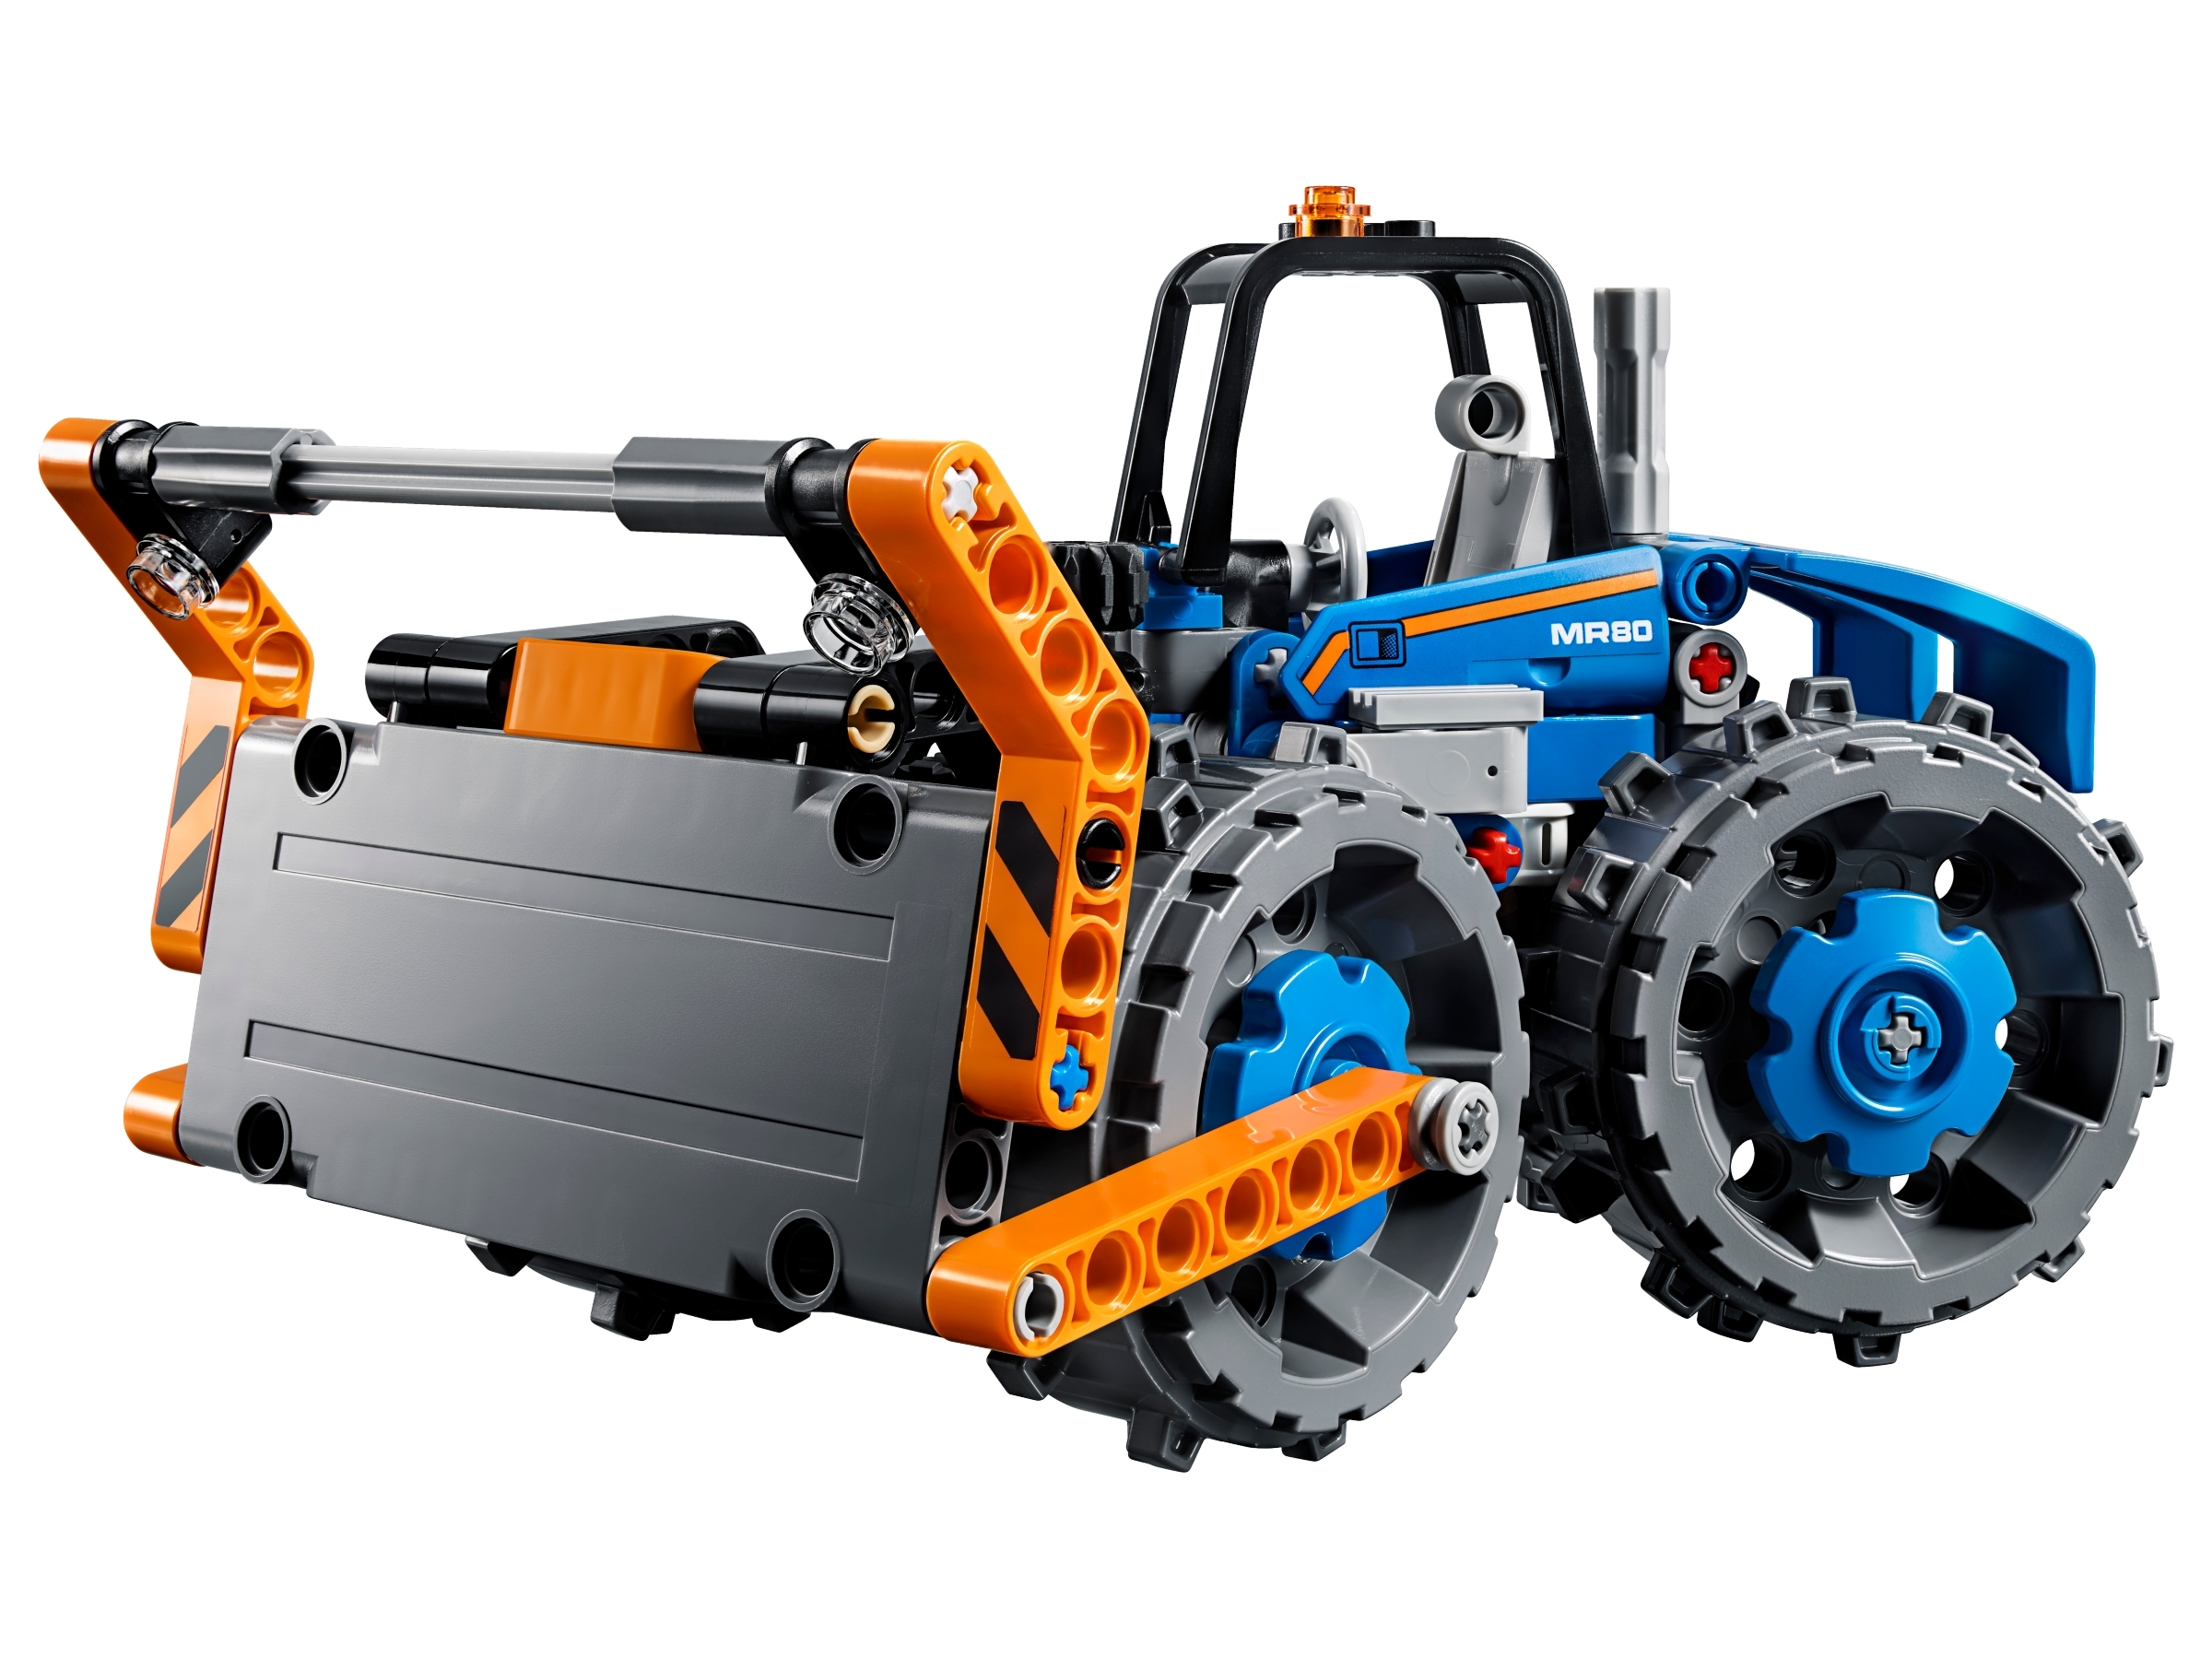 Lego Technic kompaktor 42071 Bulldozer vehí bulldozer excavadoras nuevo embalaje original 